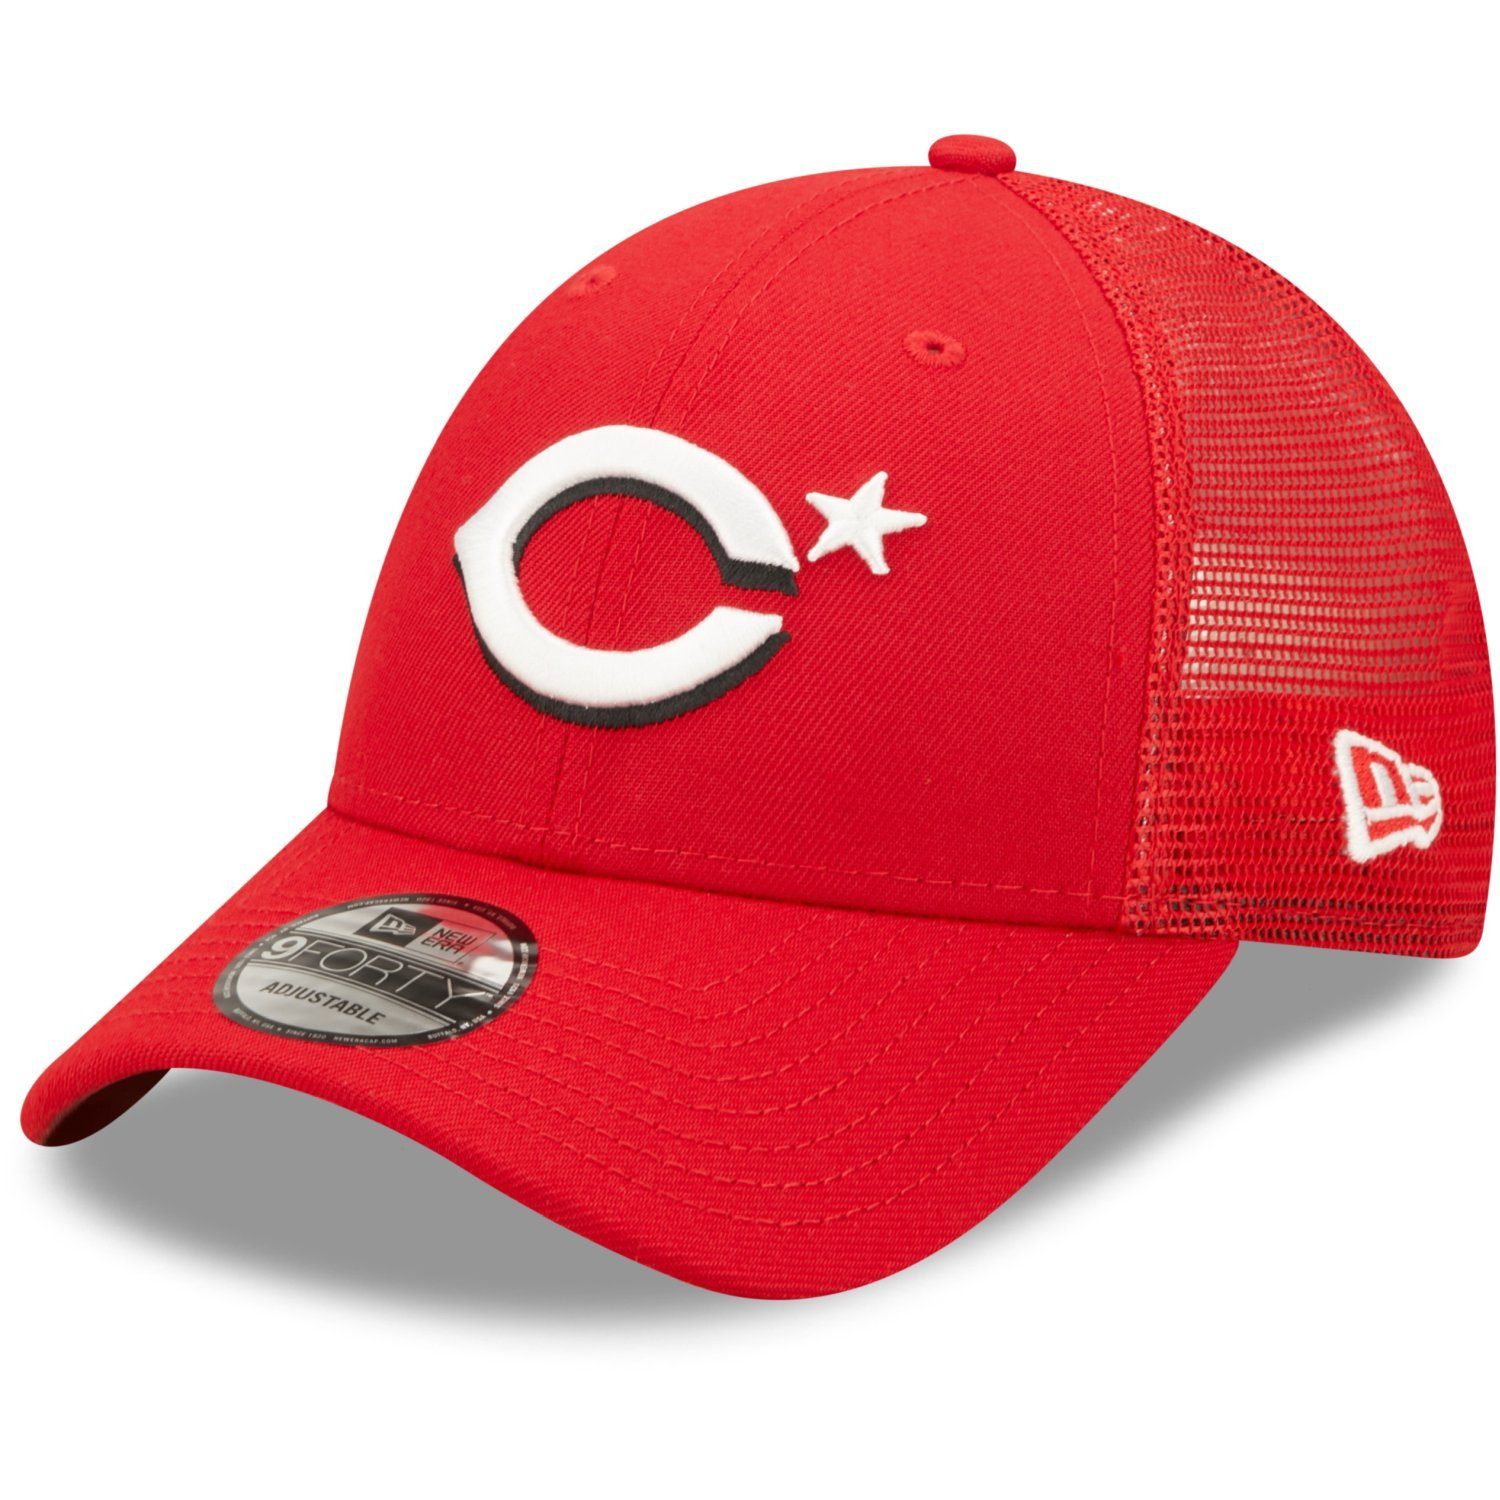 Cap New Reds Baseball GAME Era ALLSTAR 9FORTY Cincinnati